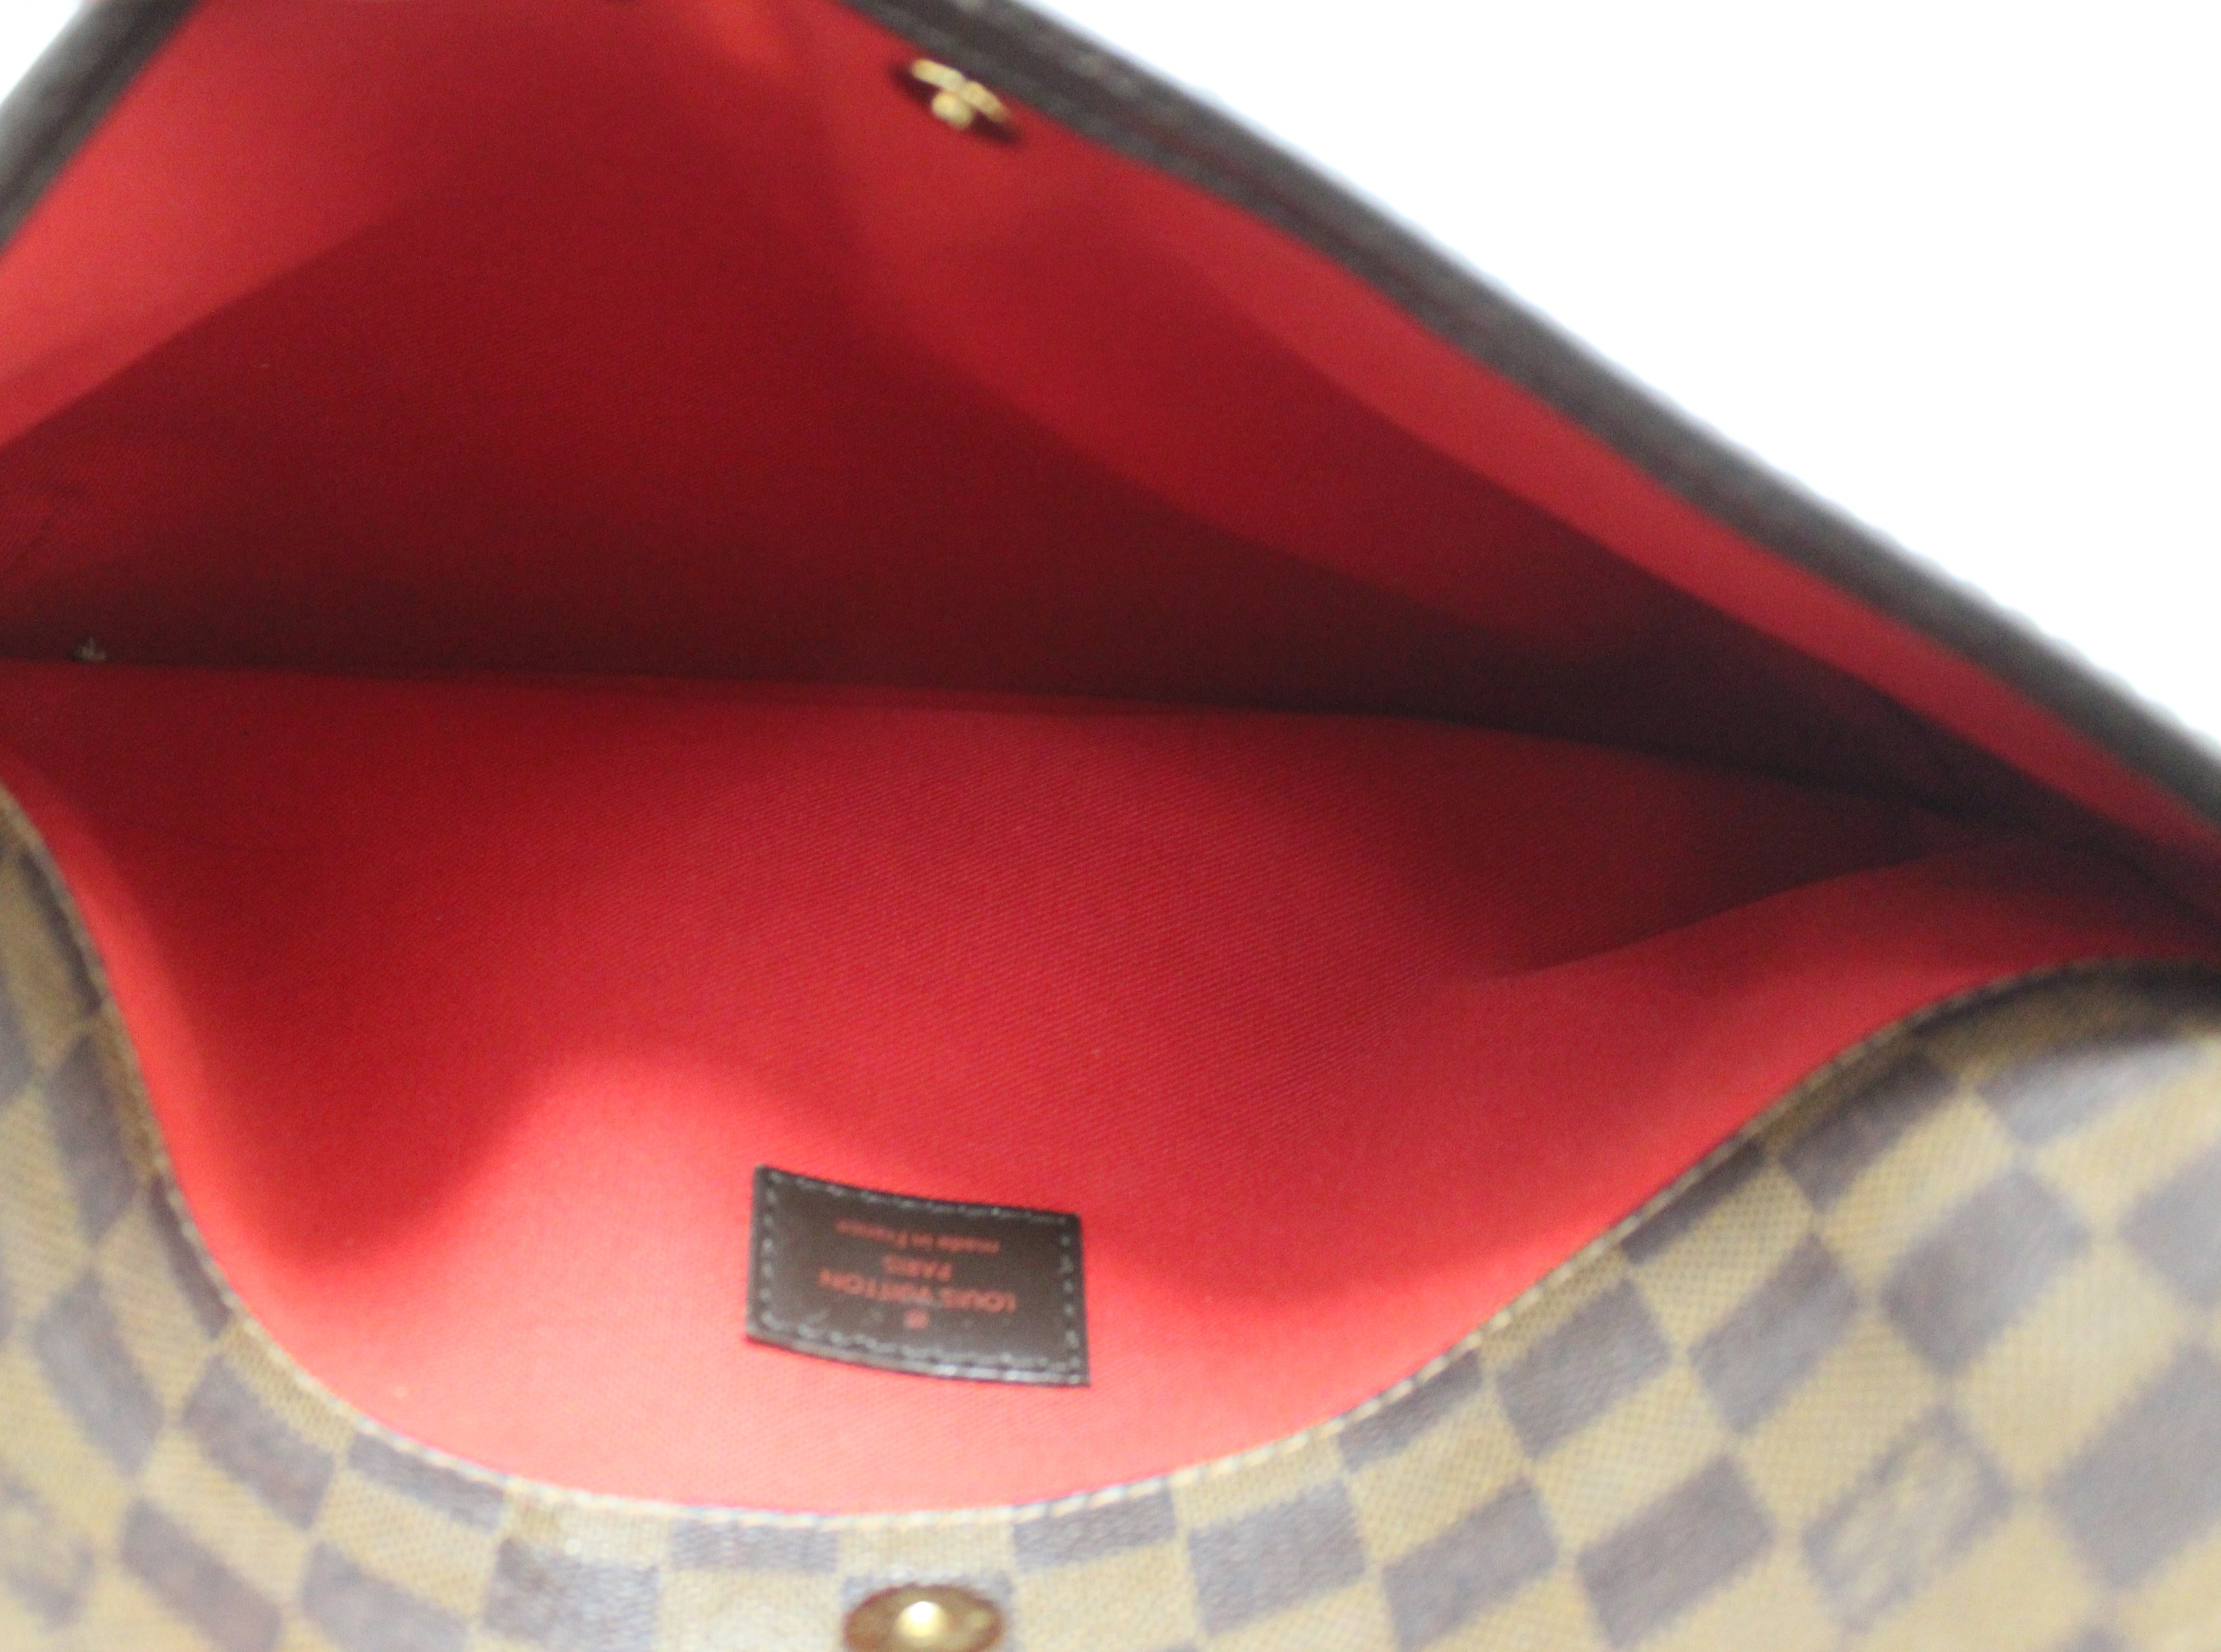 Louis Vuitton, Bags, Sold Authentic Lv Bloomsbury Pm Messenger Bag